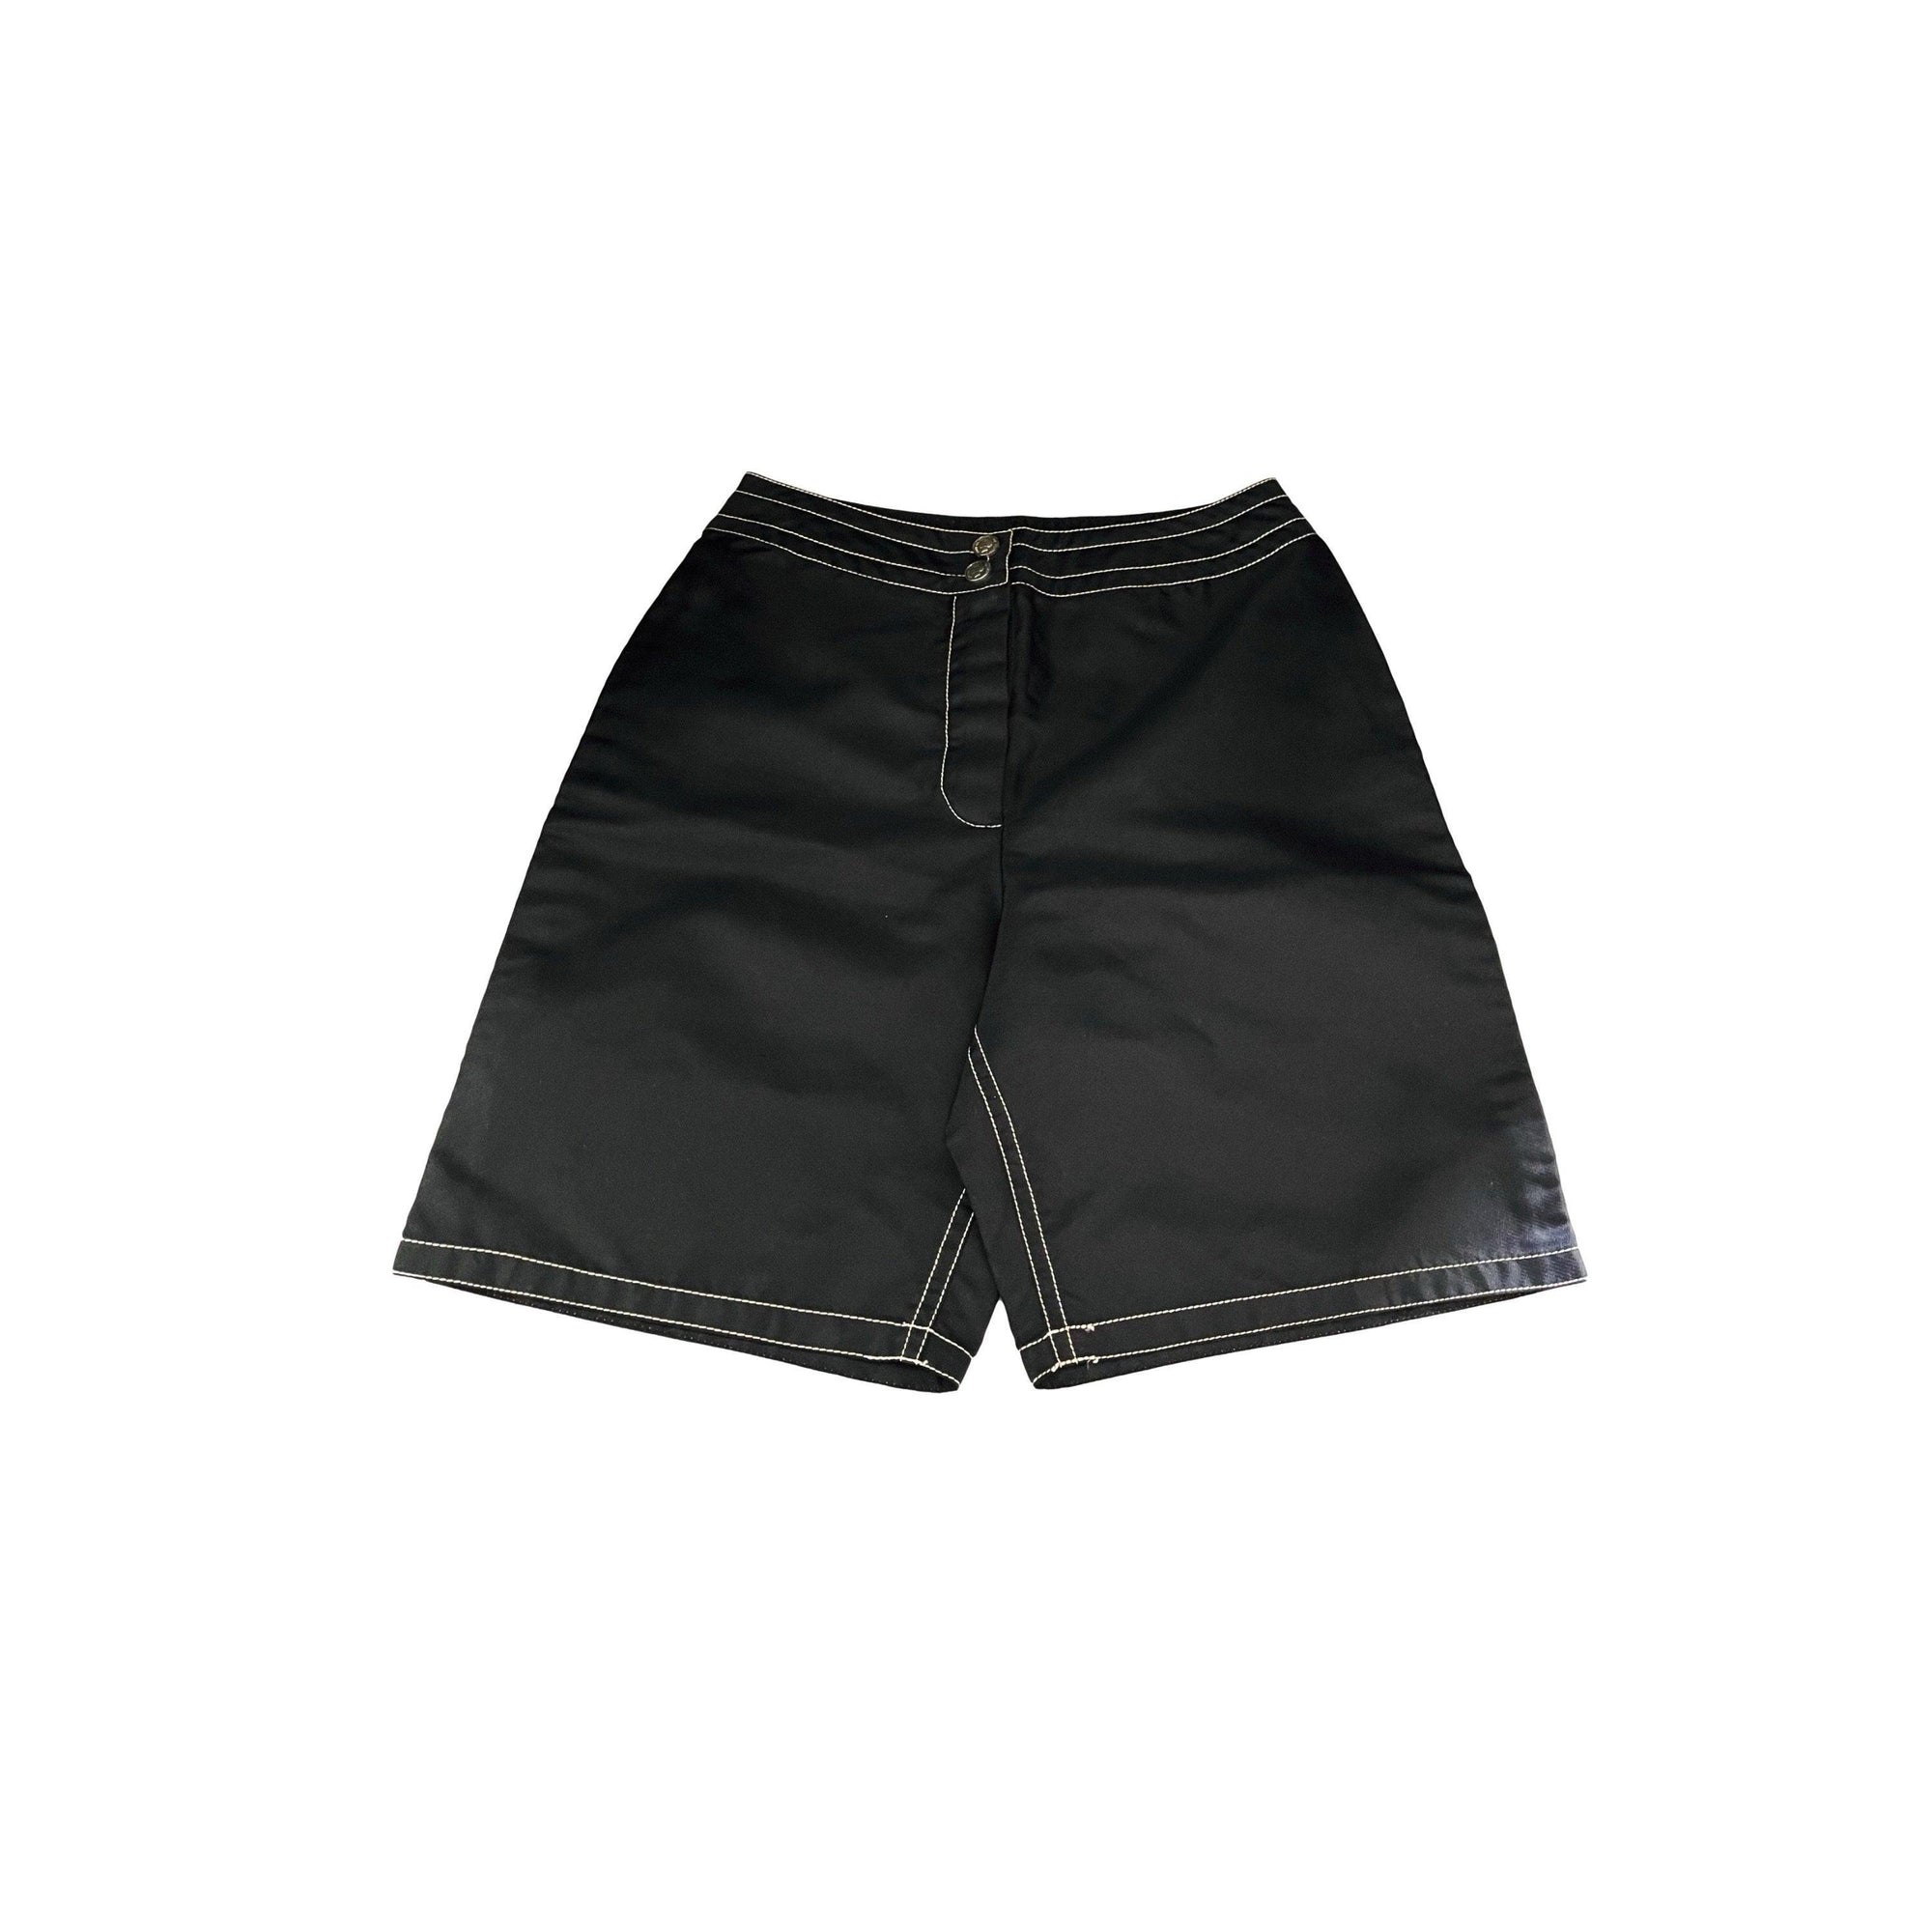 Chanel Black Shorts - Apparel